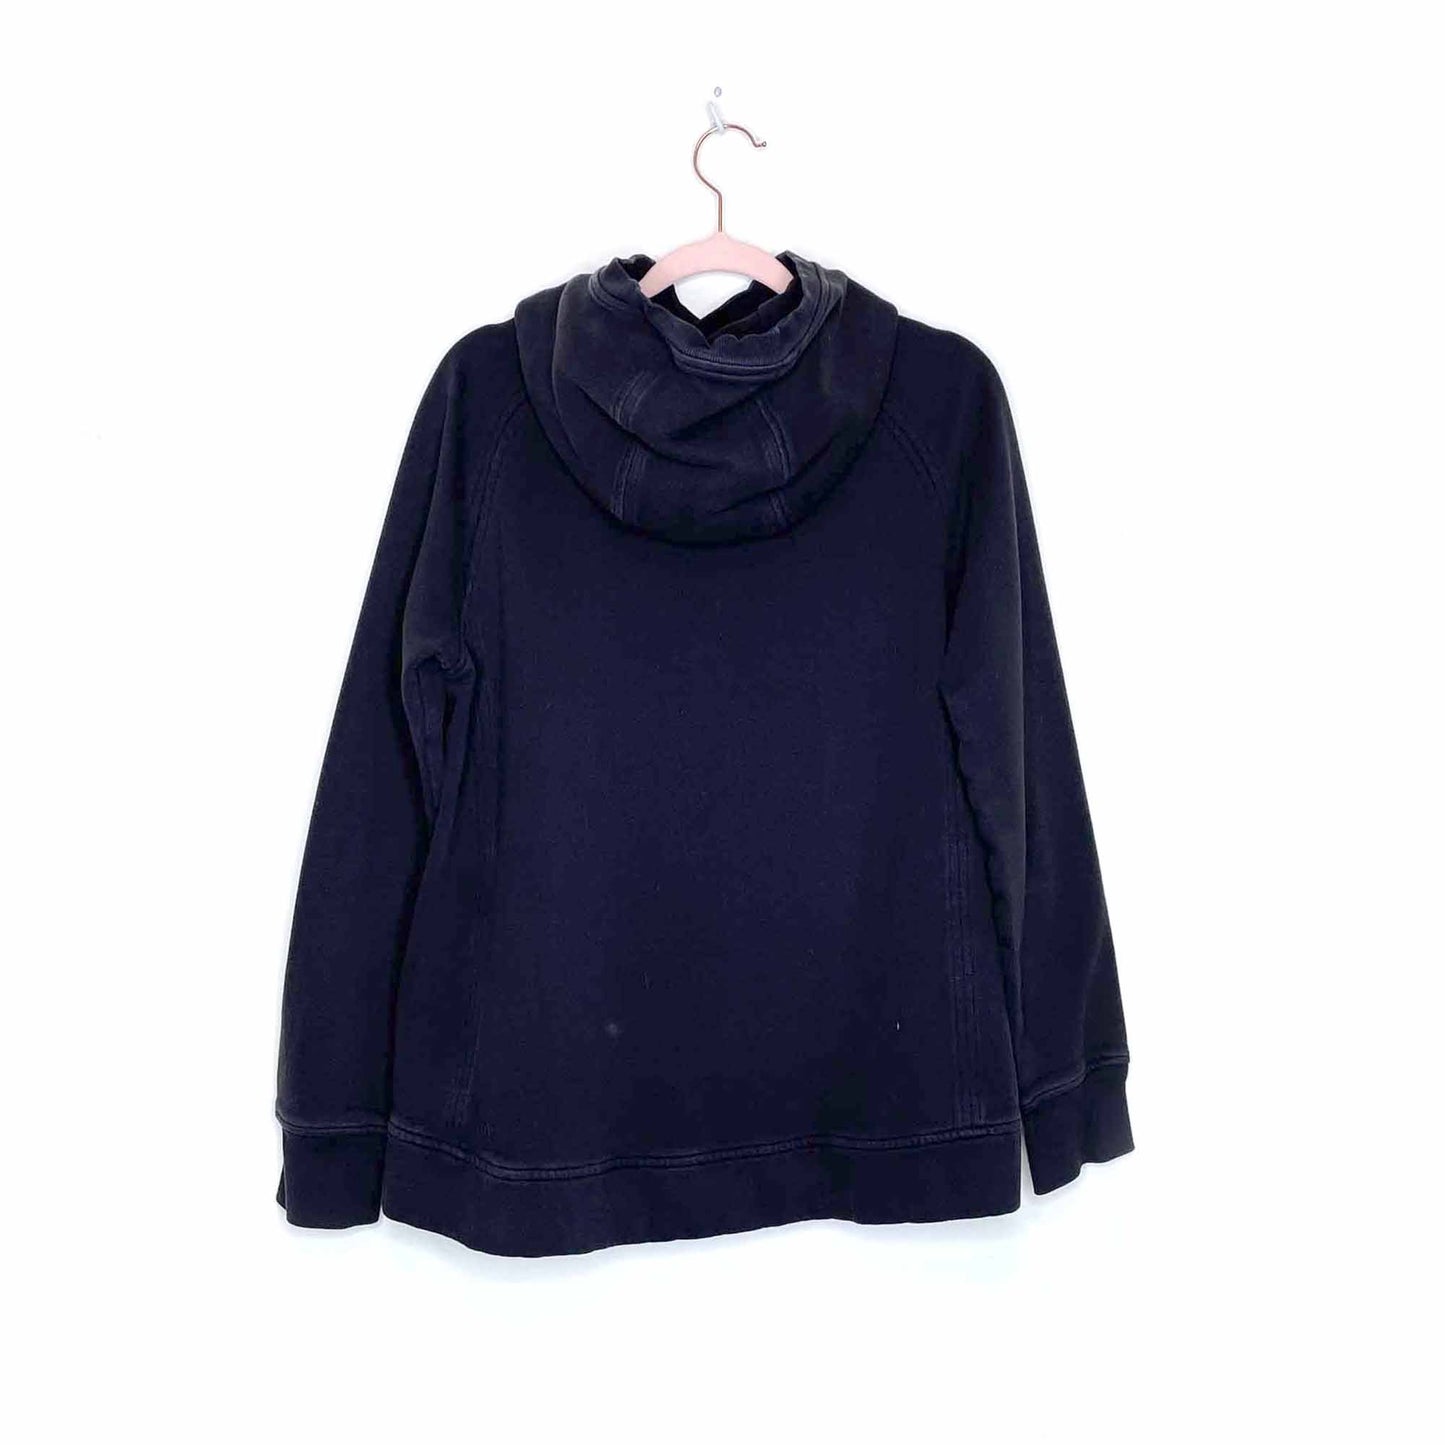 lululemon black hooded sweatshirt N60416 - size 8